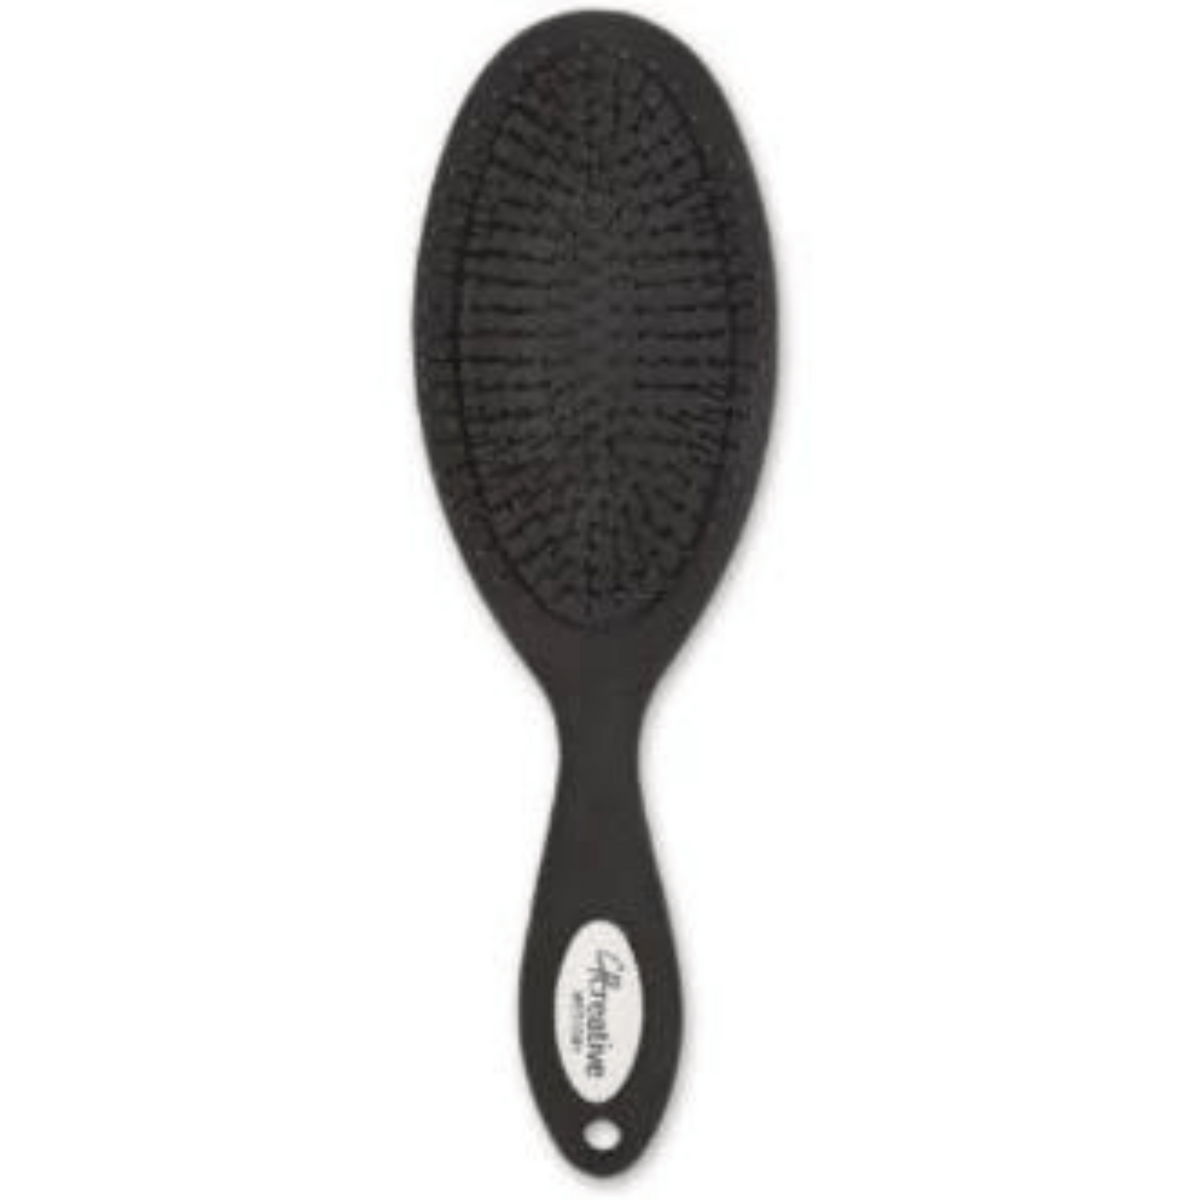 Primary Image of Black Standard Wet/Dry Detangling Paddle Hair Brush